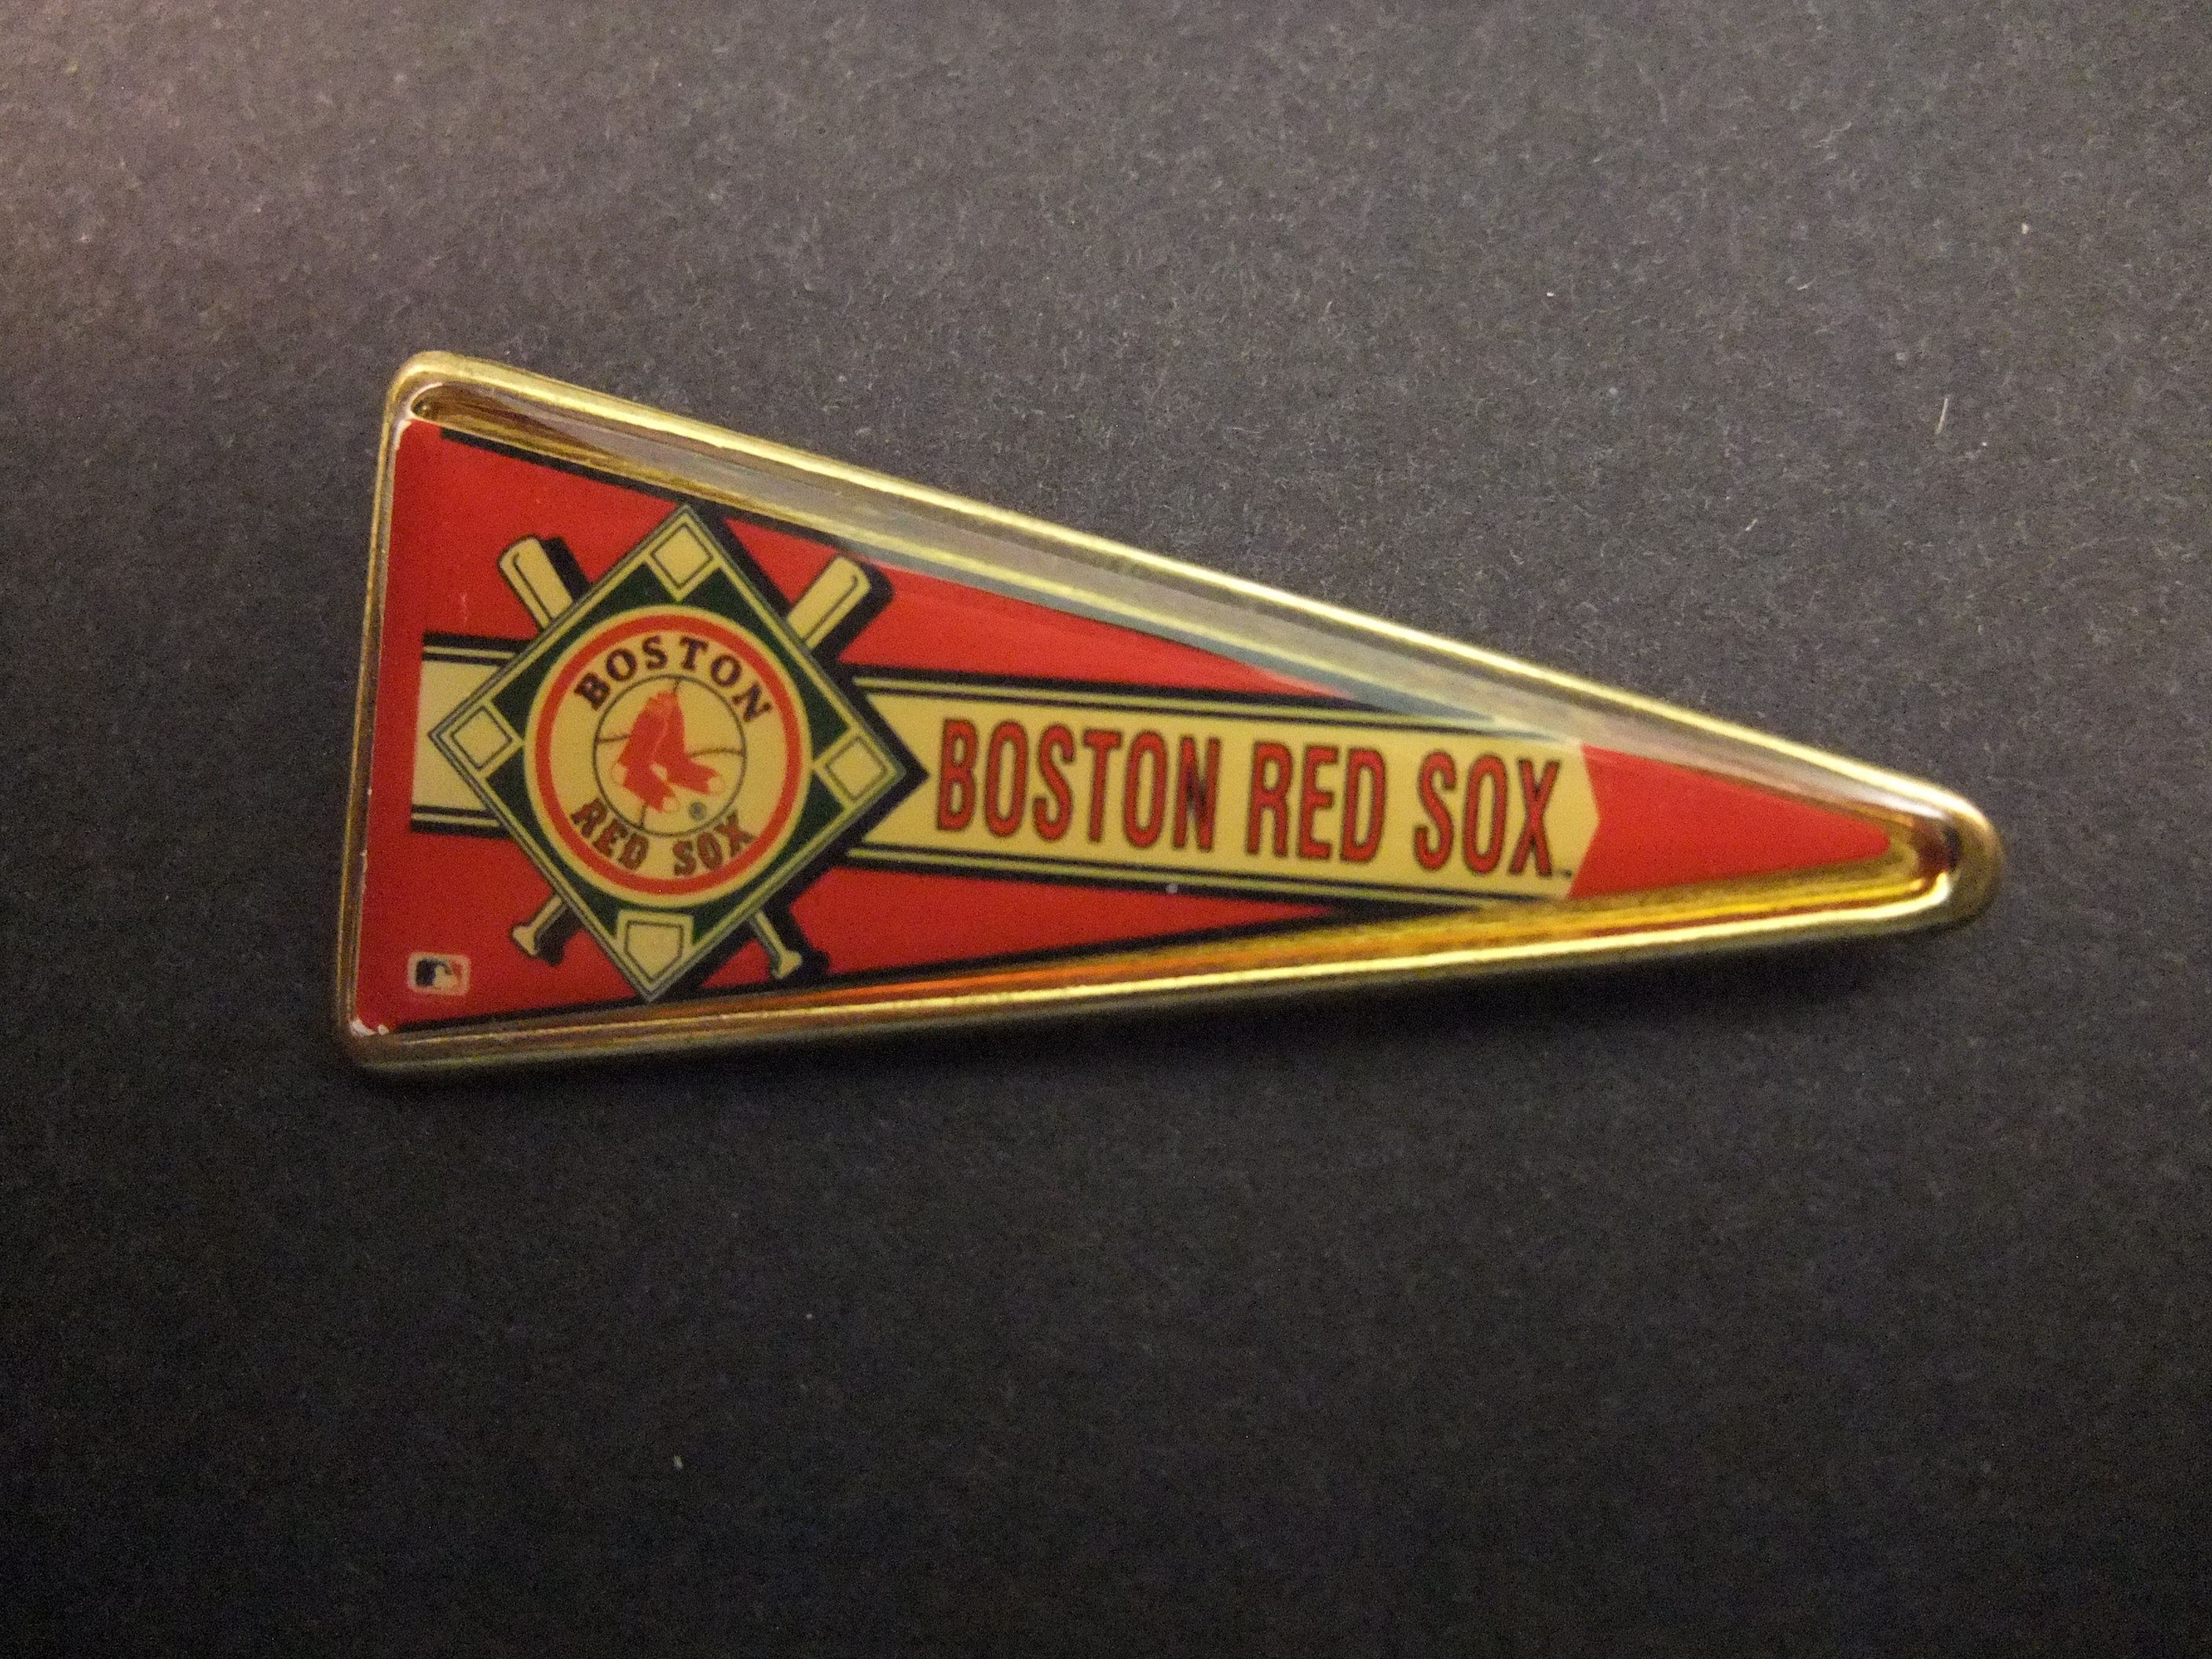 Boston Red Sox baseballteam MLB